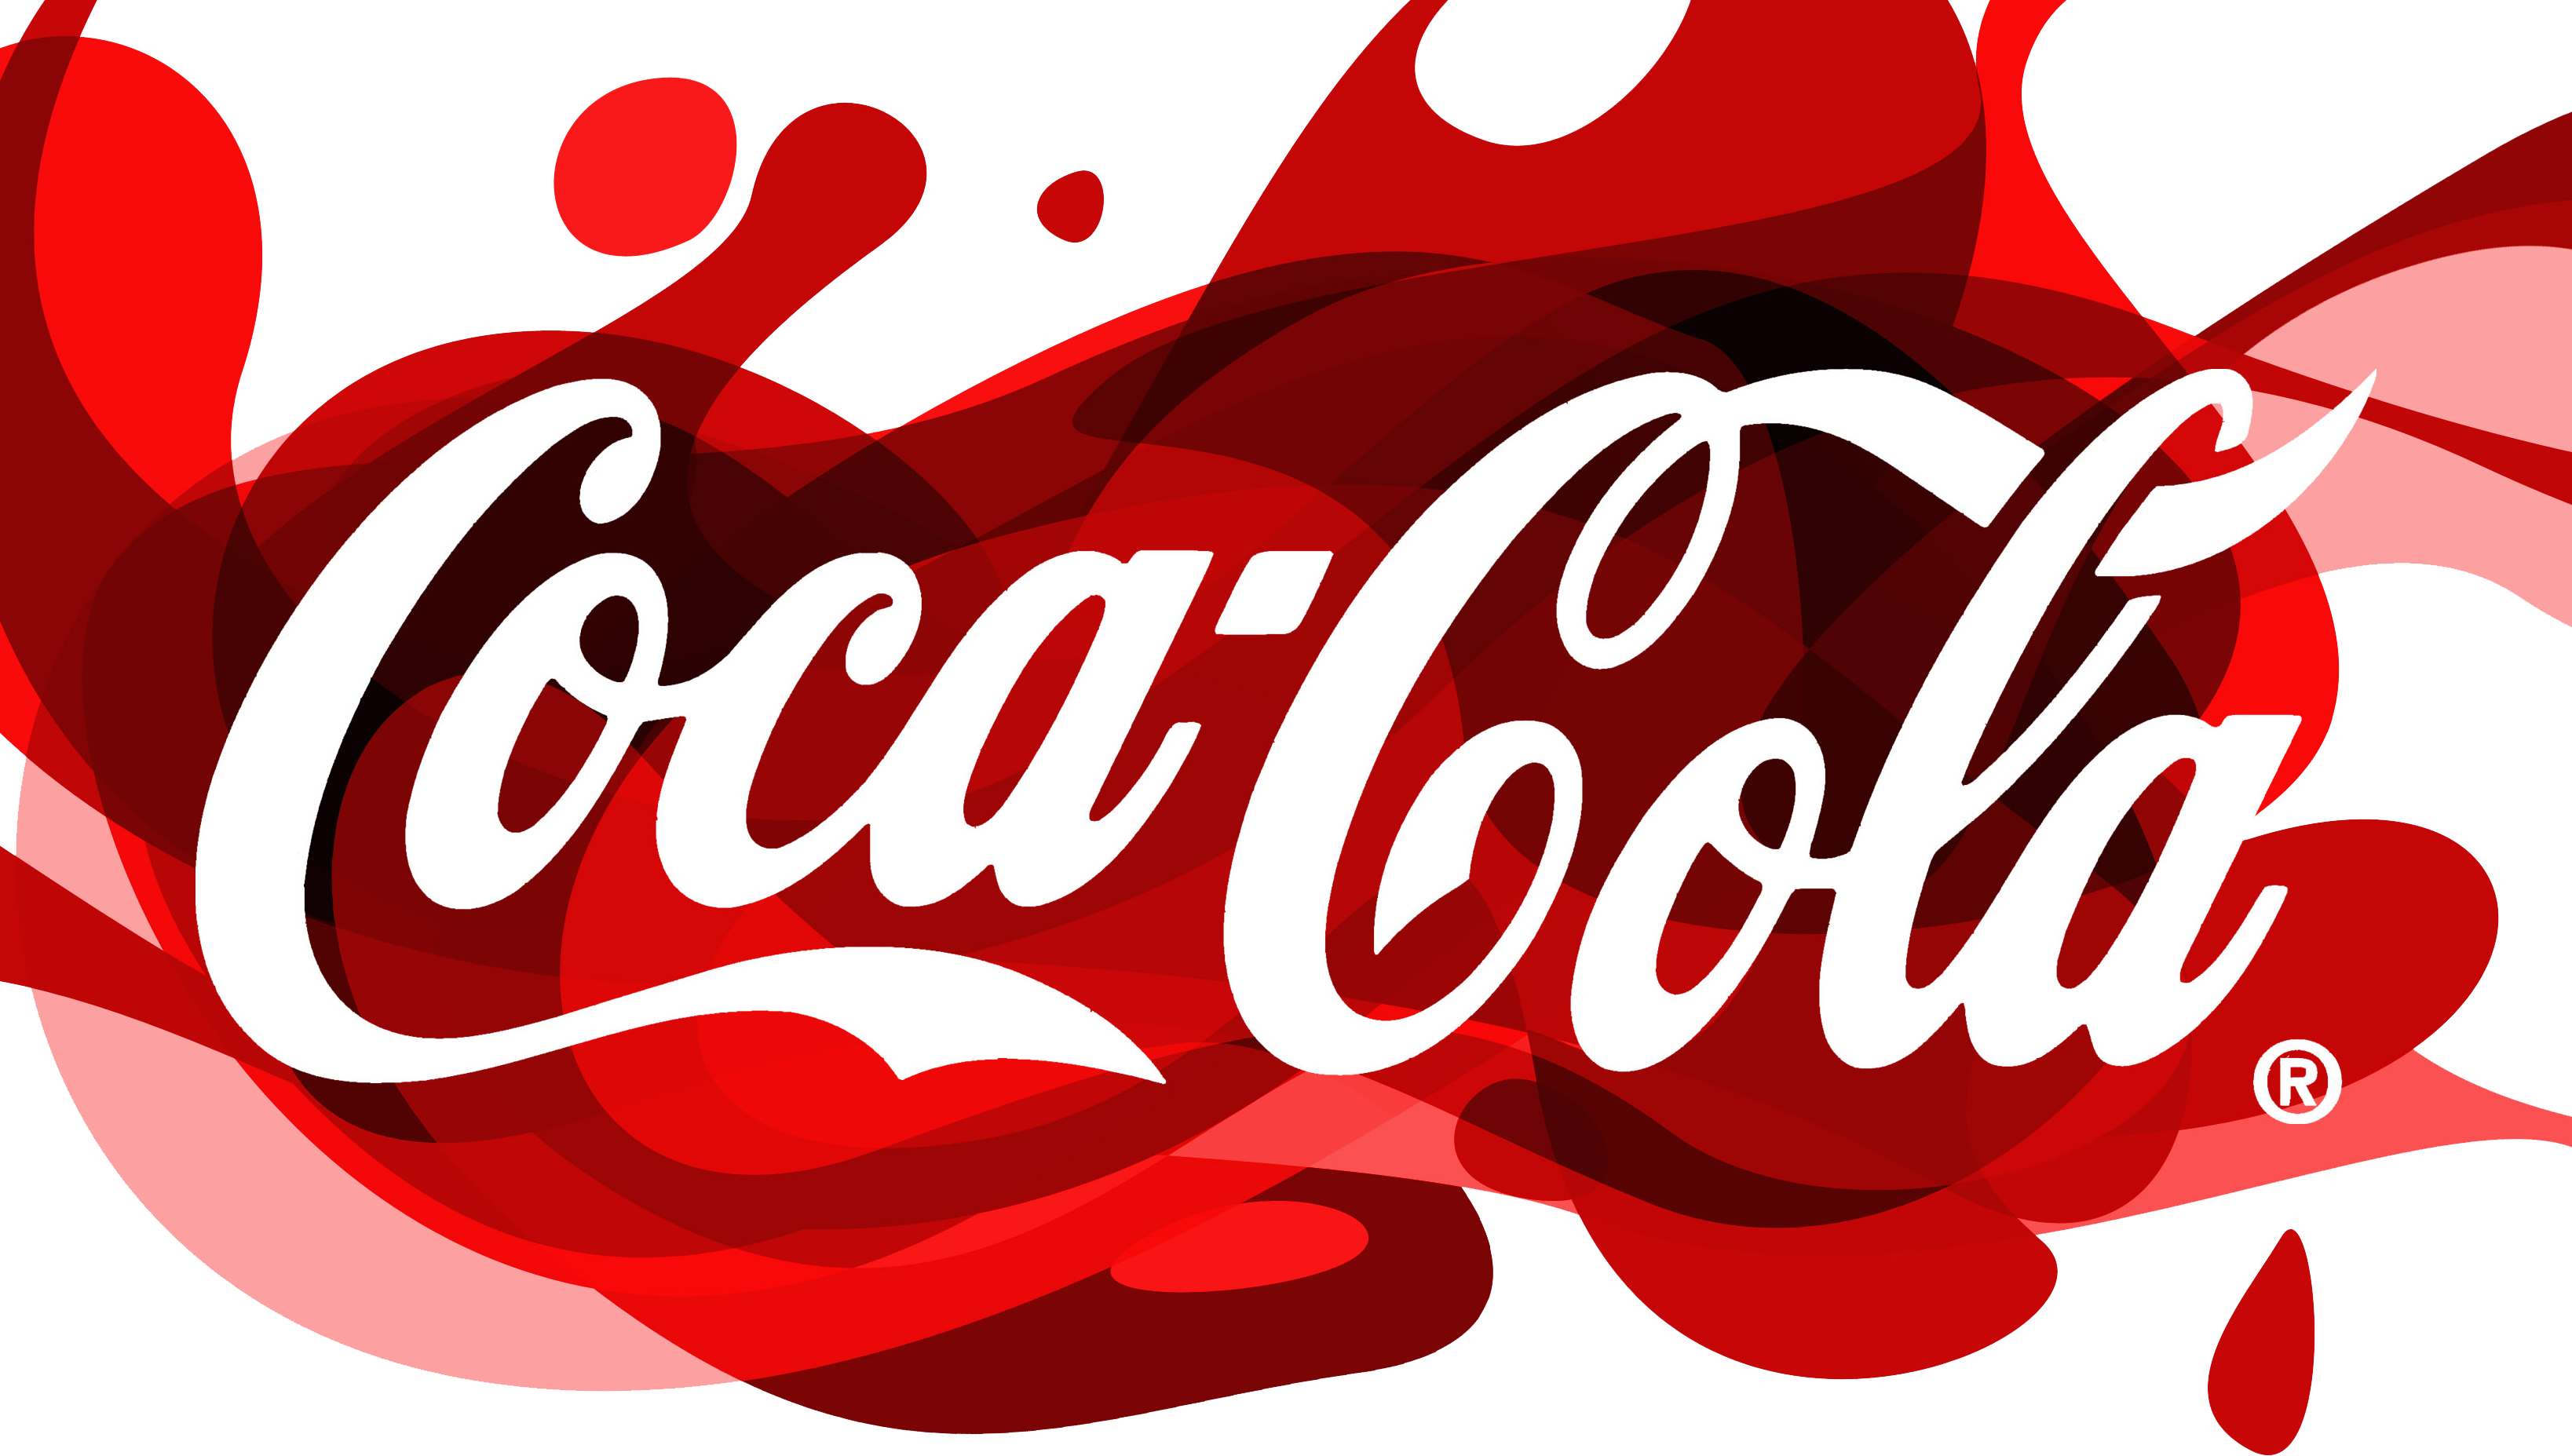 Coca cola logotipo PNG Free Download